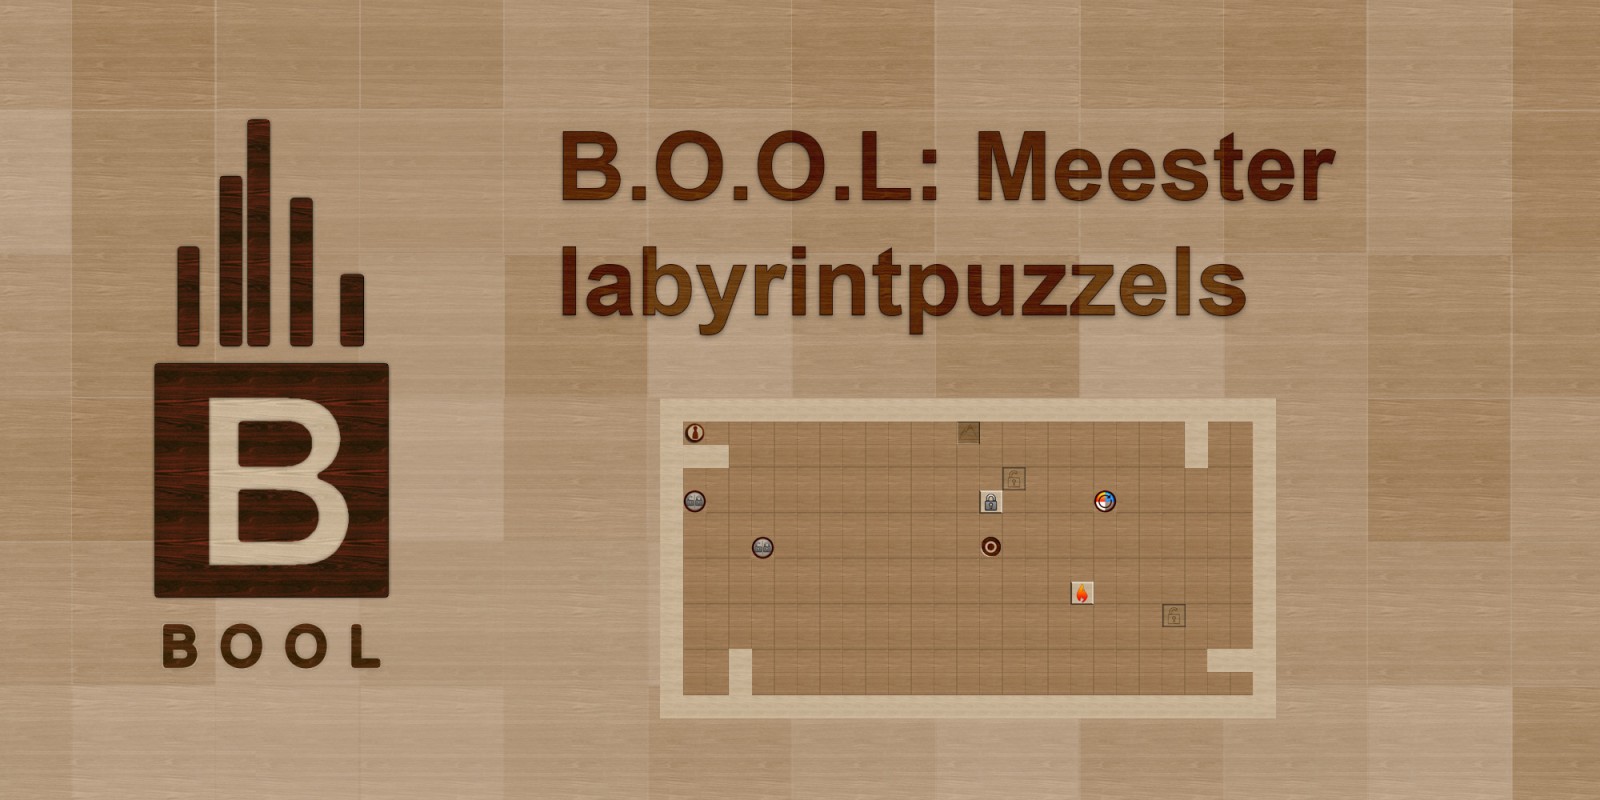 B.O.O.L: Meester labyrintpuzzels